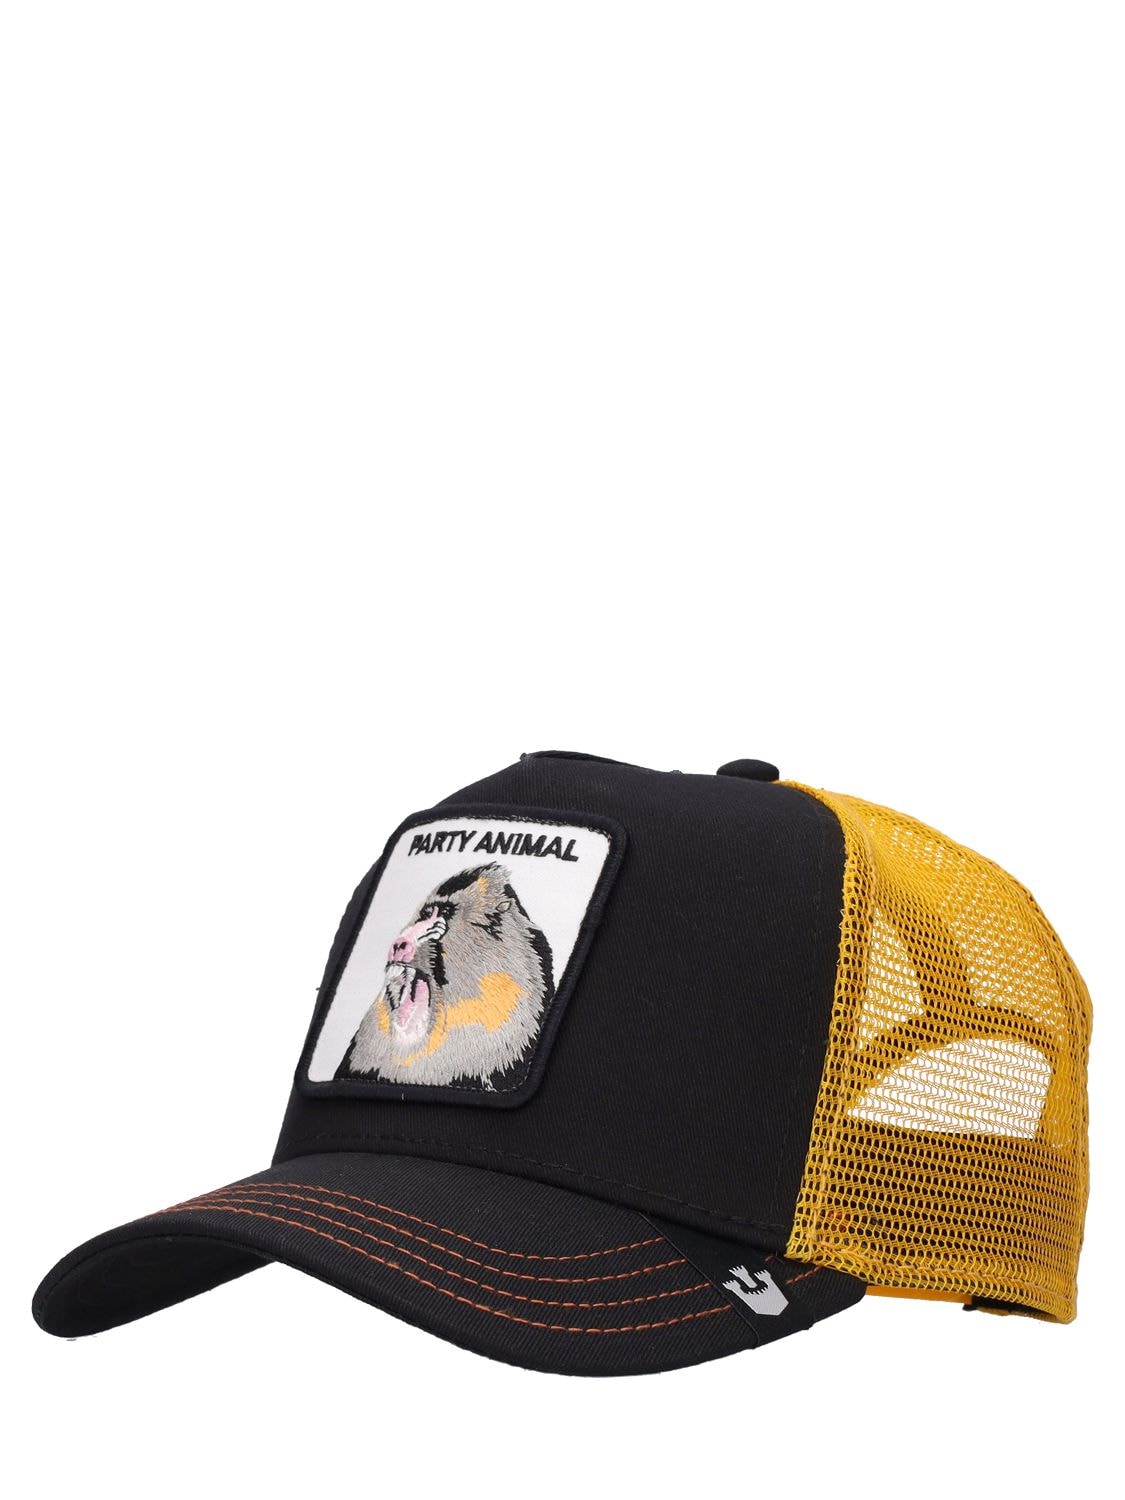 Shop Goorin Bros The Party Animal Trucker Hat W/ Patch In Black